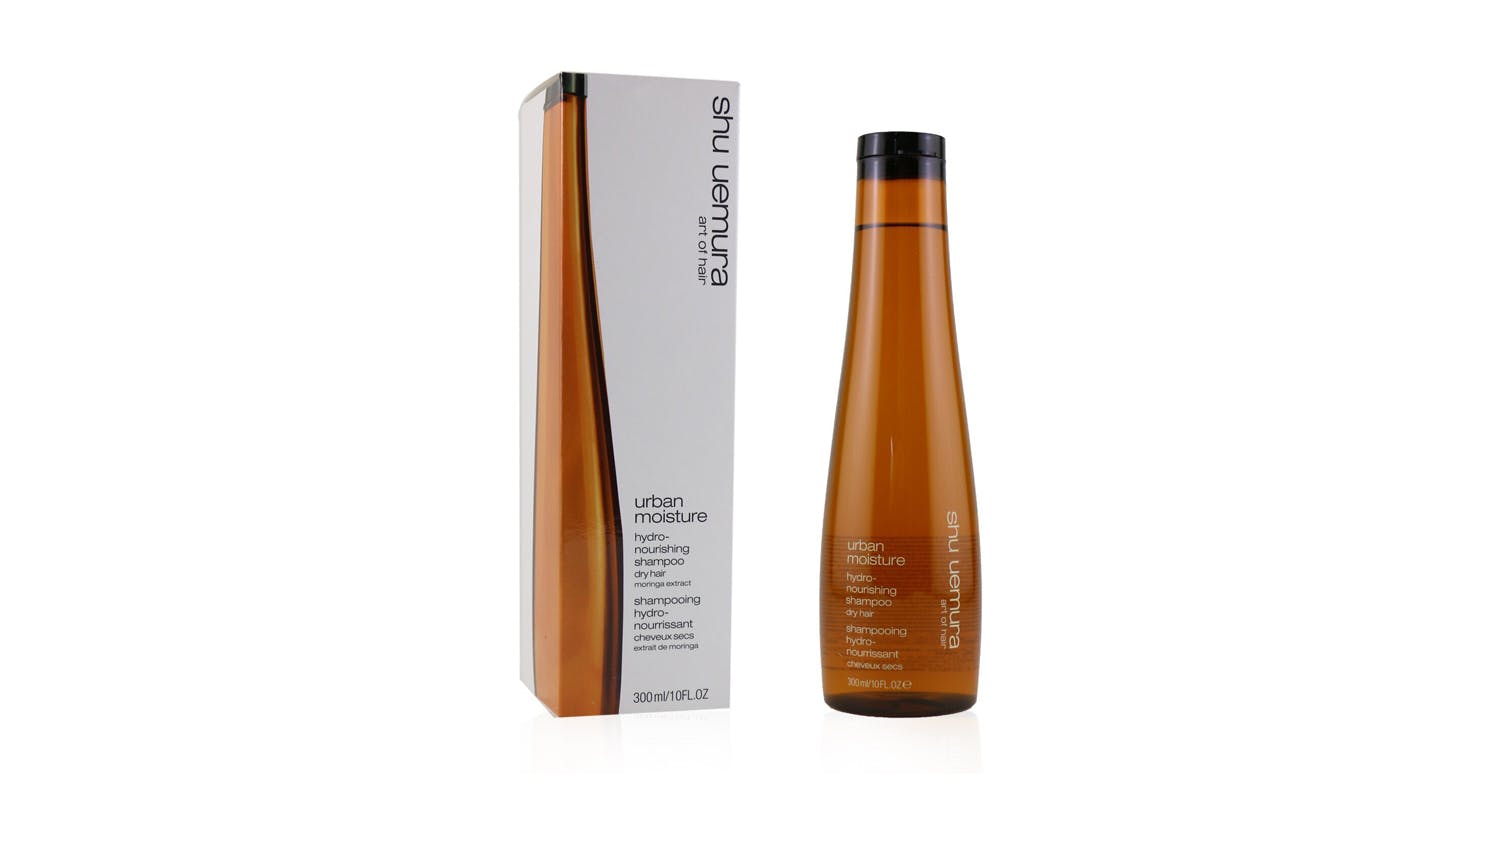 Urban Moisture Hydro-Nourishing Shampoo (Dry Hair) - 300ml/10oz